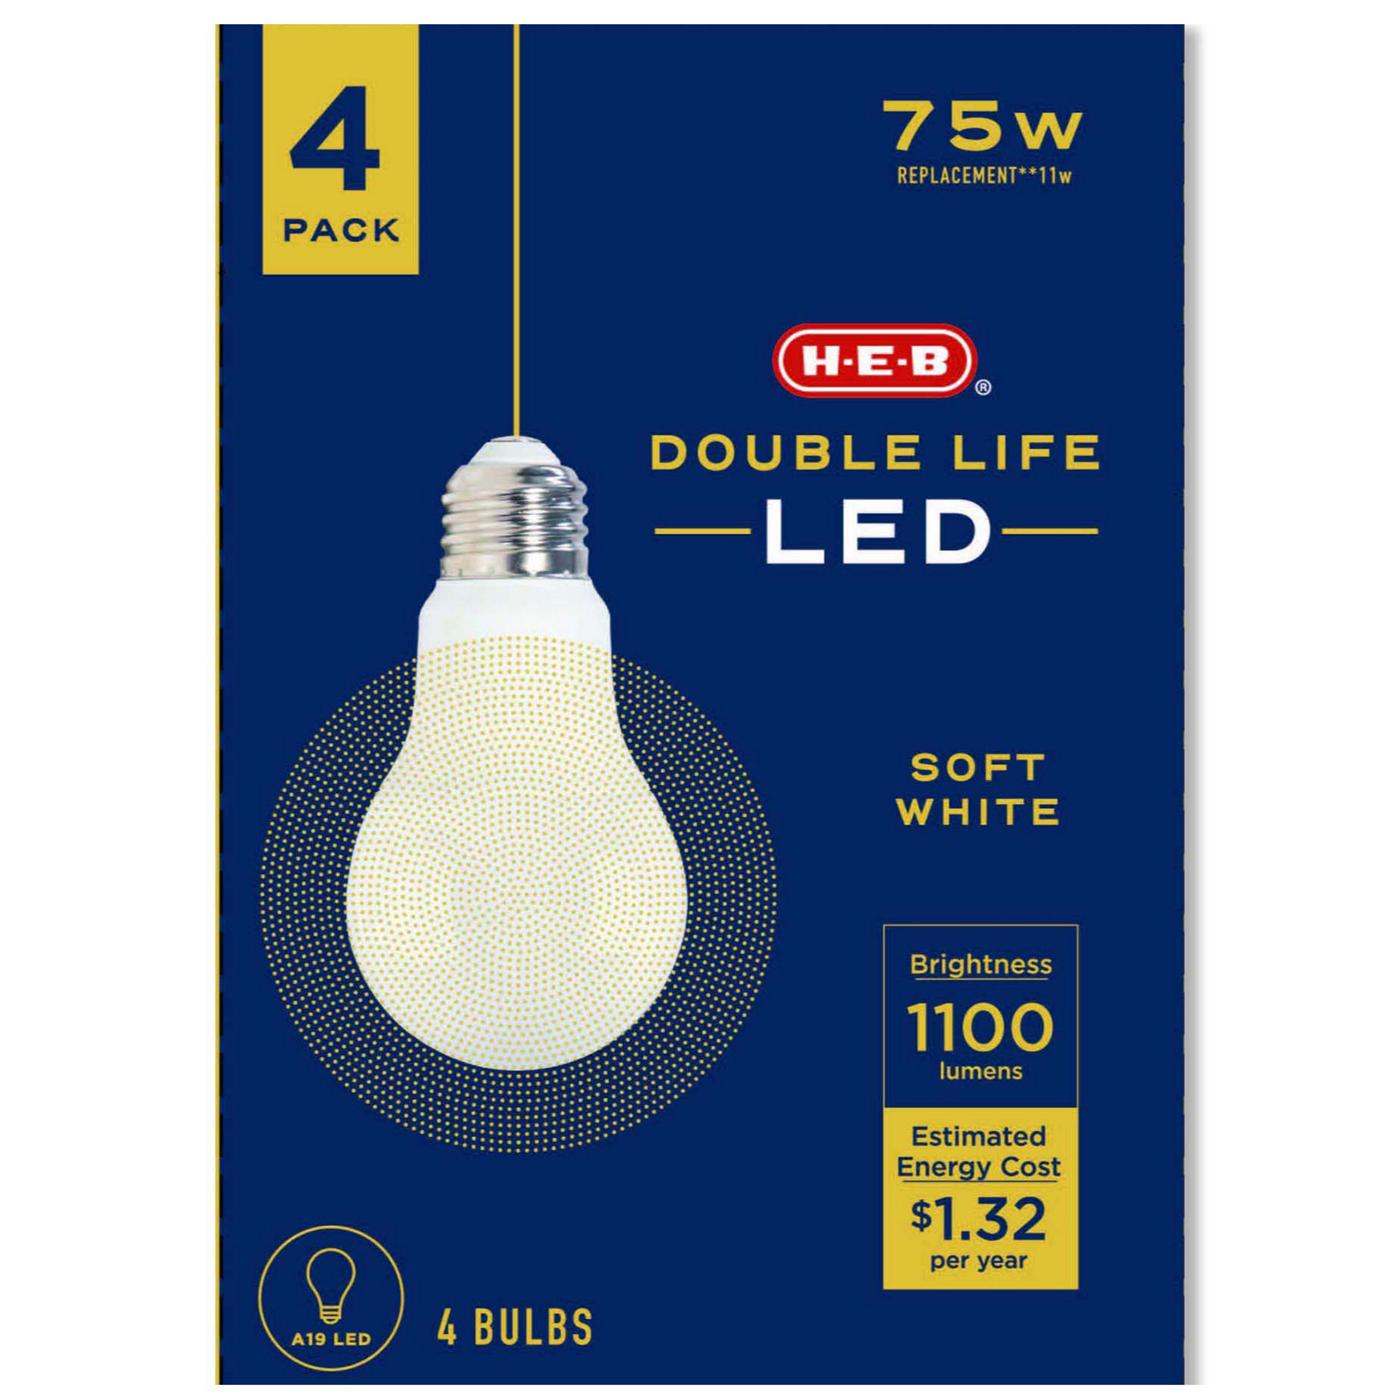 H-E-B Double Life A19 75-Watt LED Light Bulbs - Soft White; image 1 of 2